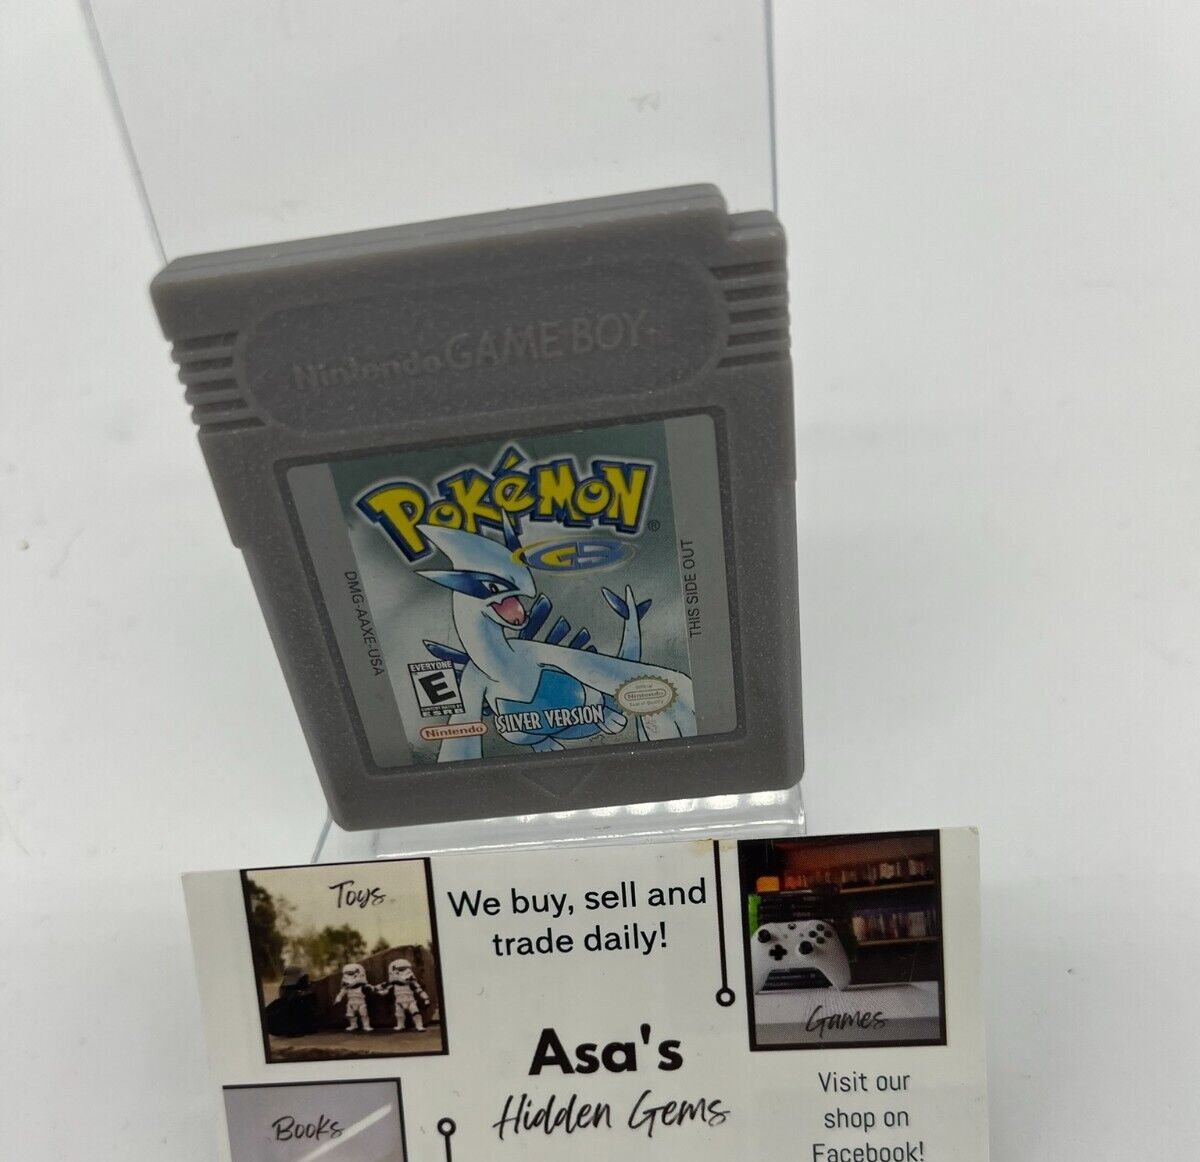 Pokémon: Silver Version (Nintendo Game Boy Color, 2000) - Not Working